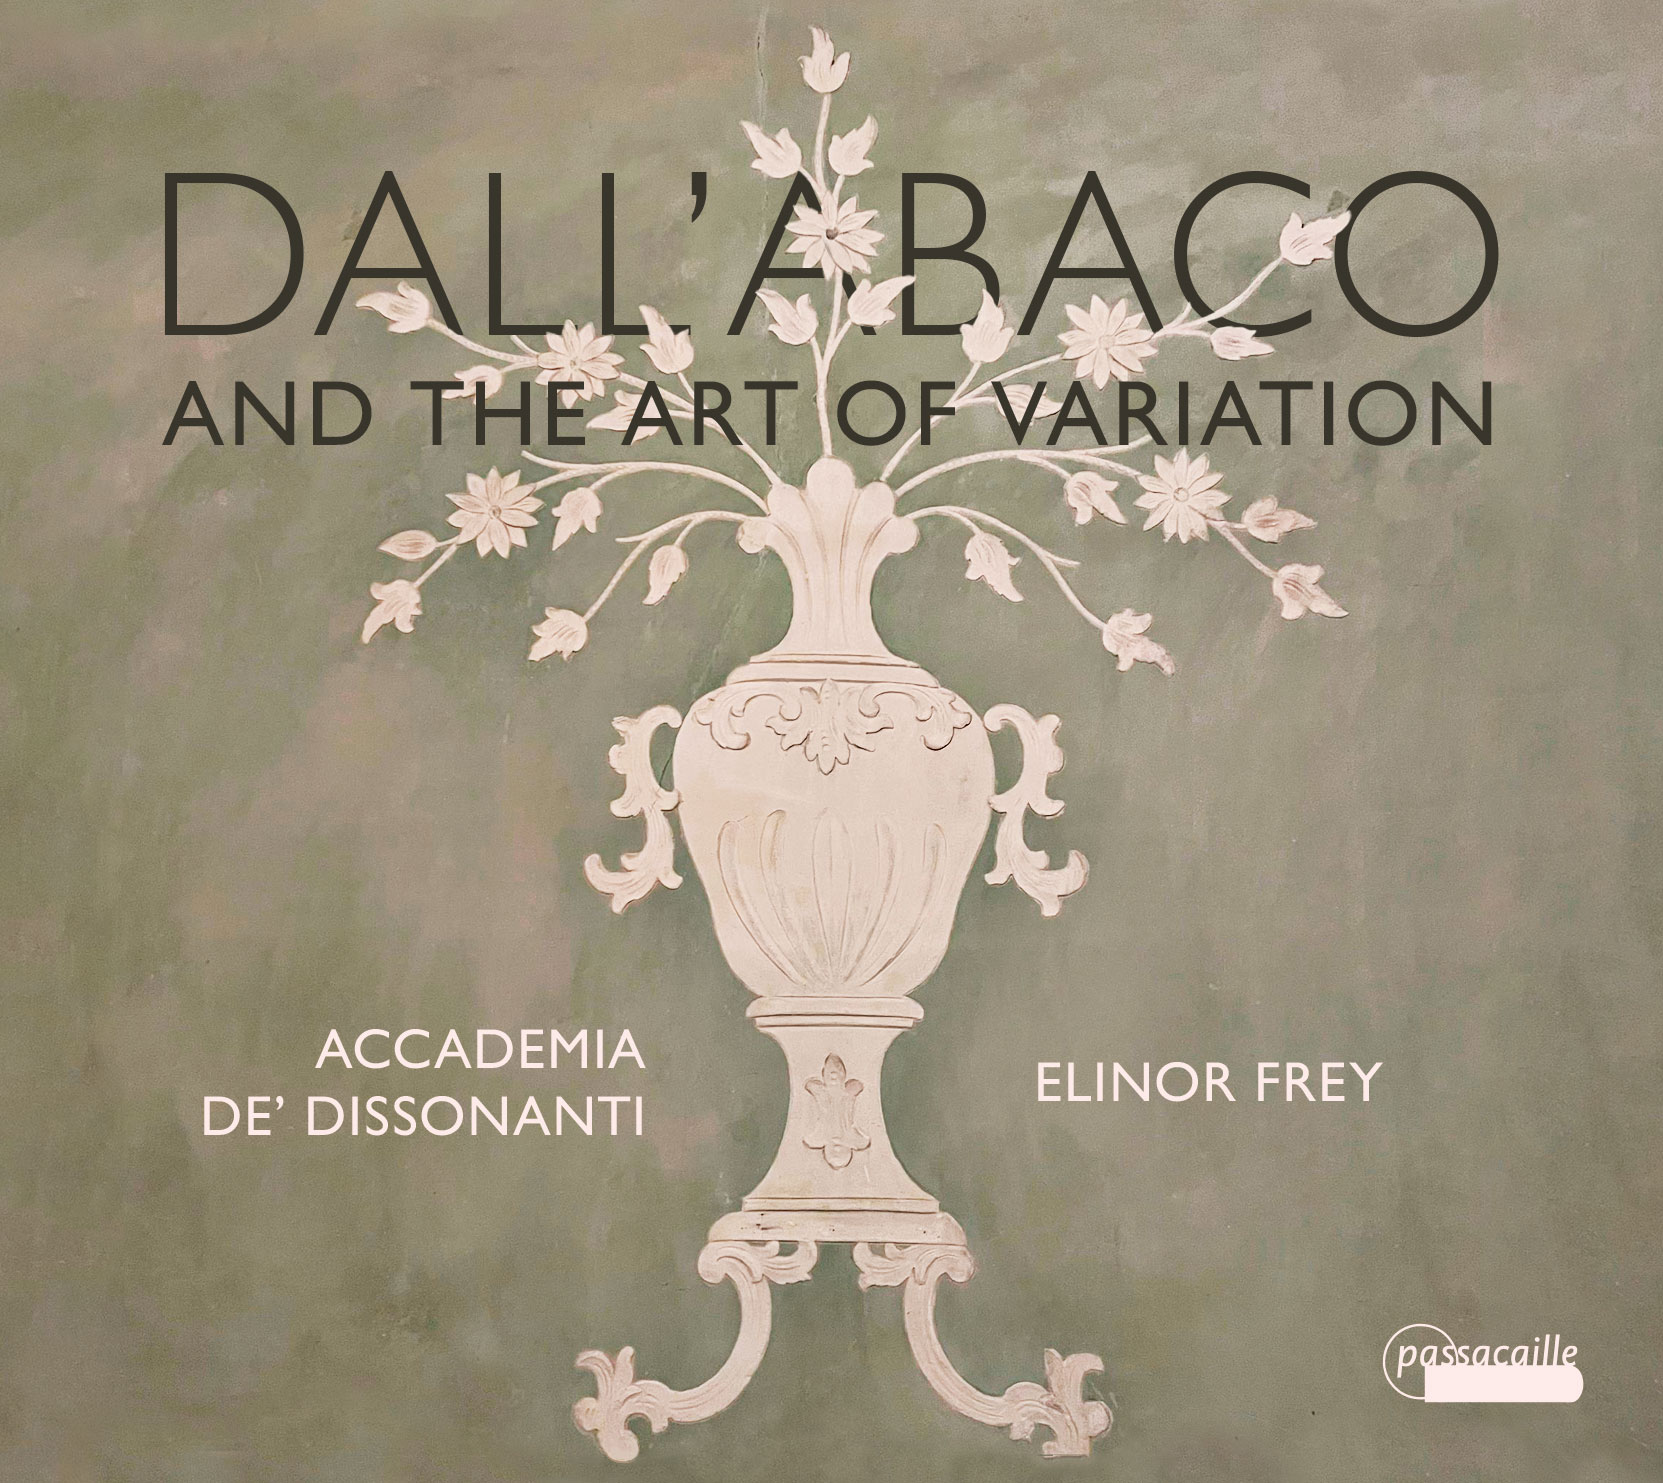 The Cello According to Dall'Abaco